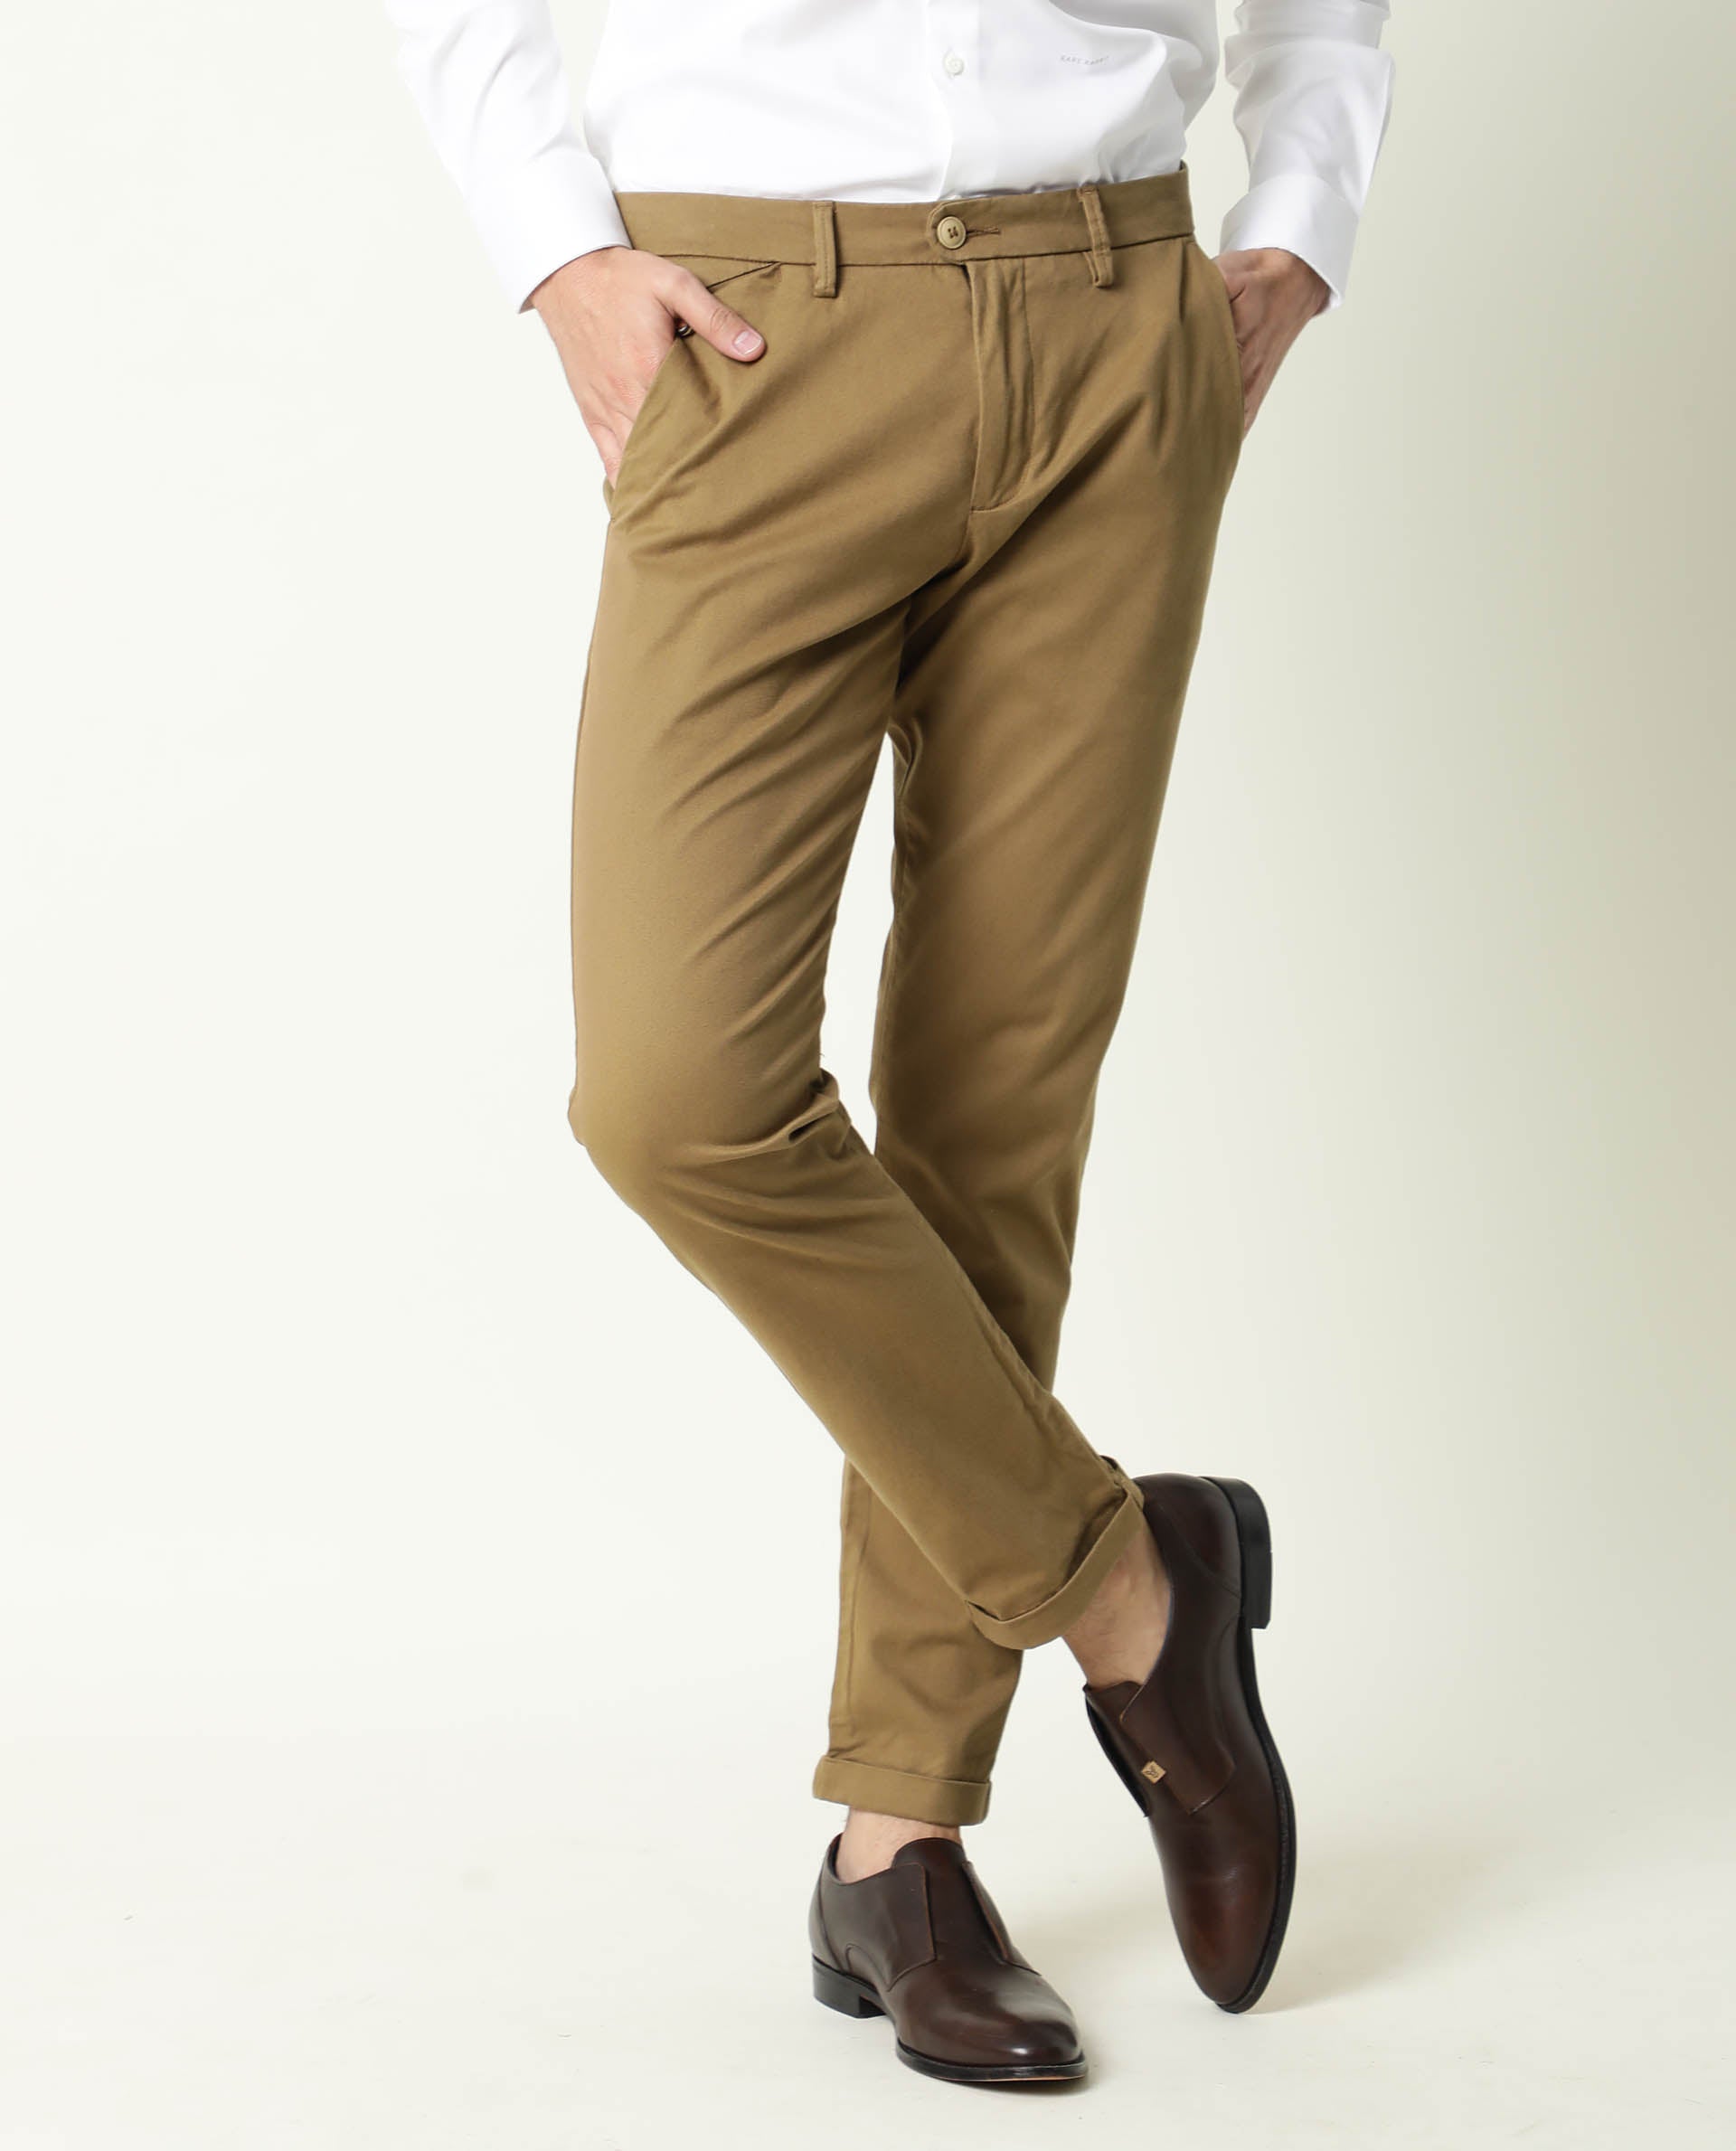 Rare Rabbit Men's Trews-22 Olive Solid Mid-Rise Regular Fit Trouser